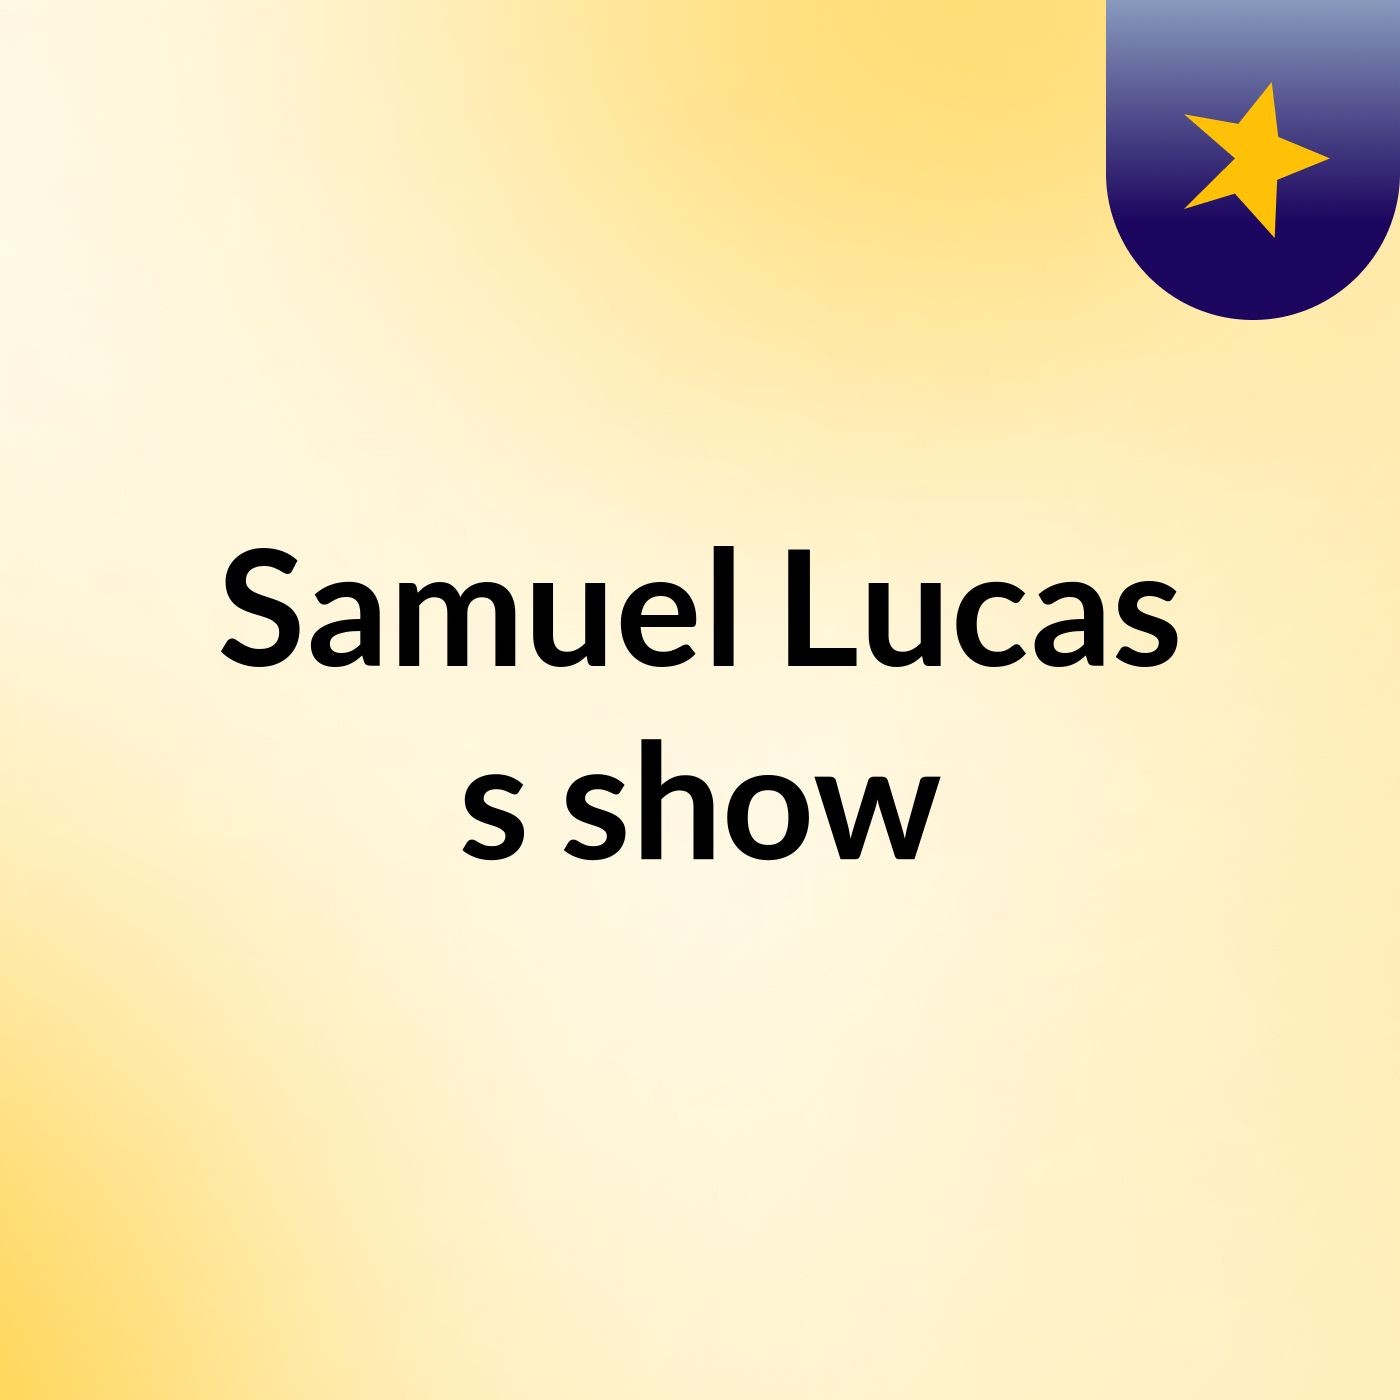 Samuel Lucas's show